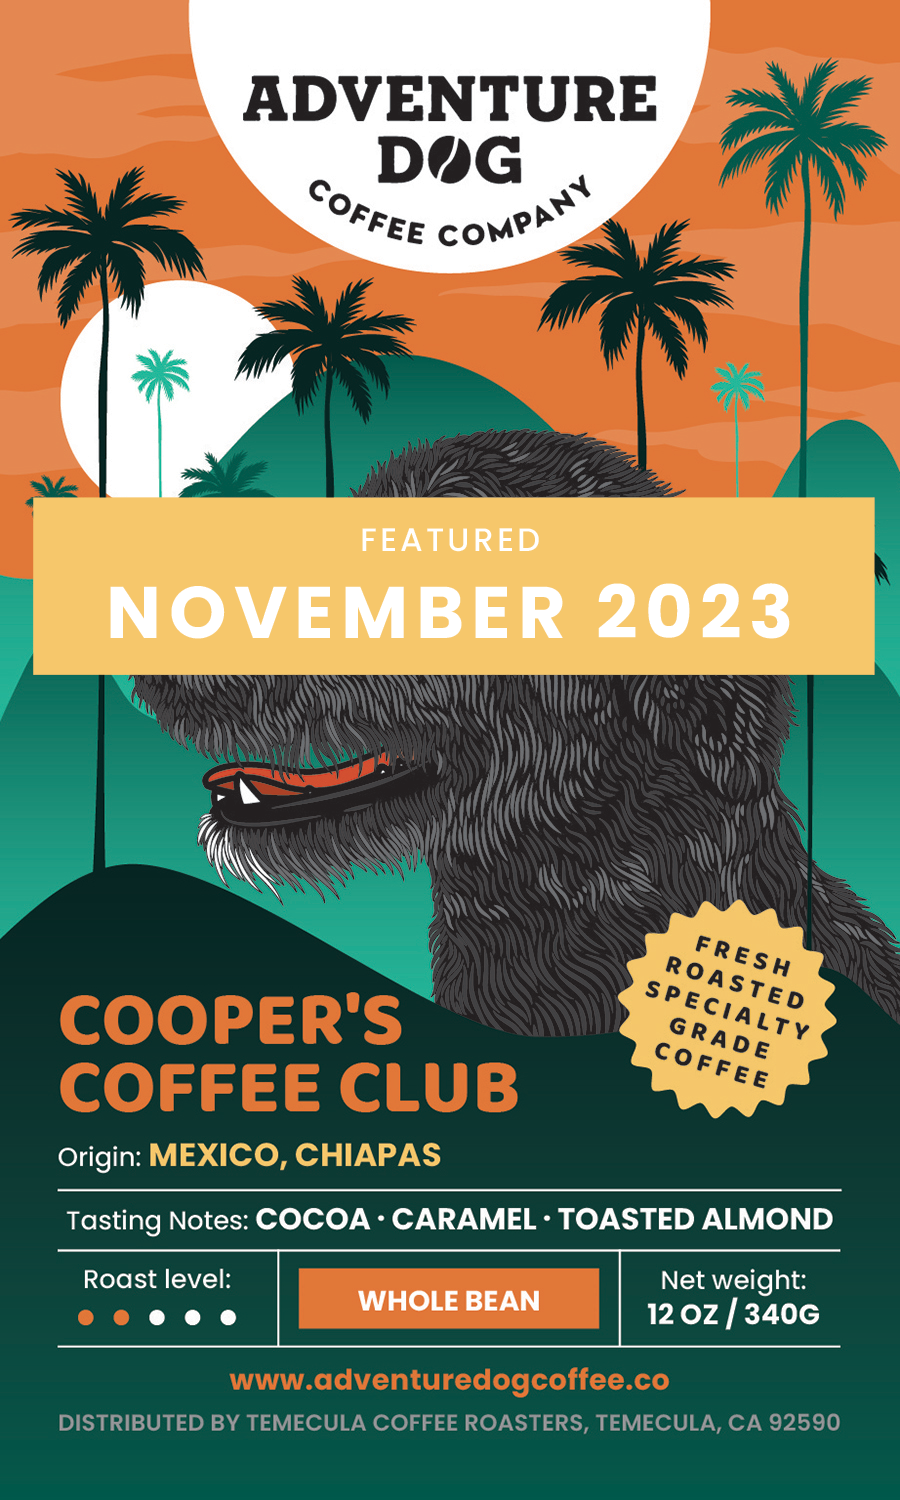 Cooper's Coffee Club